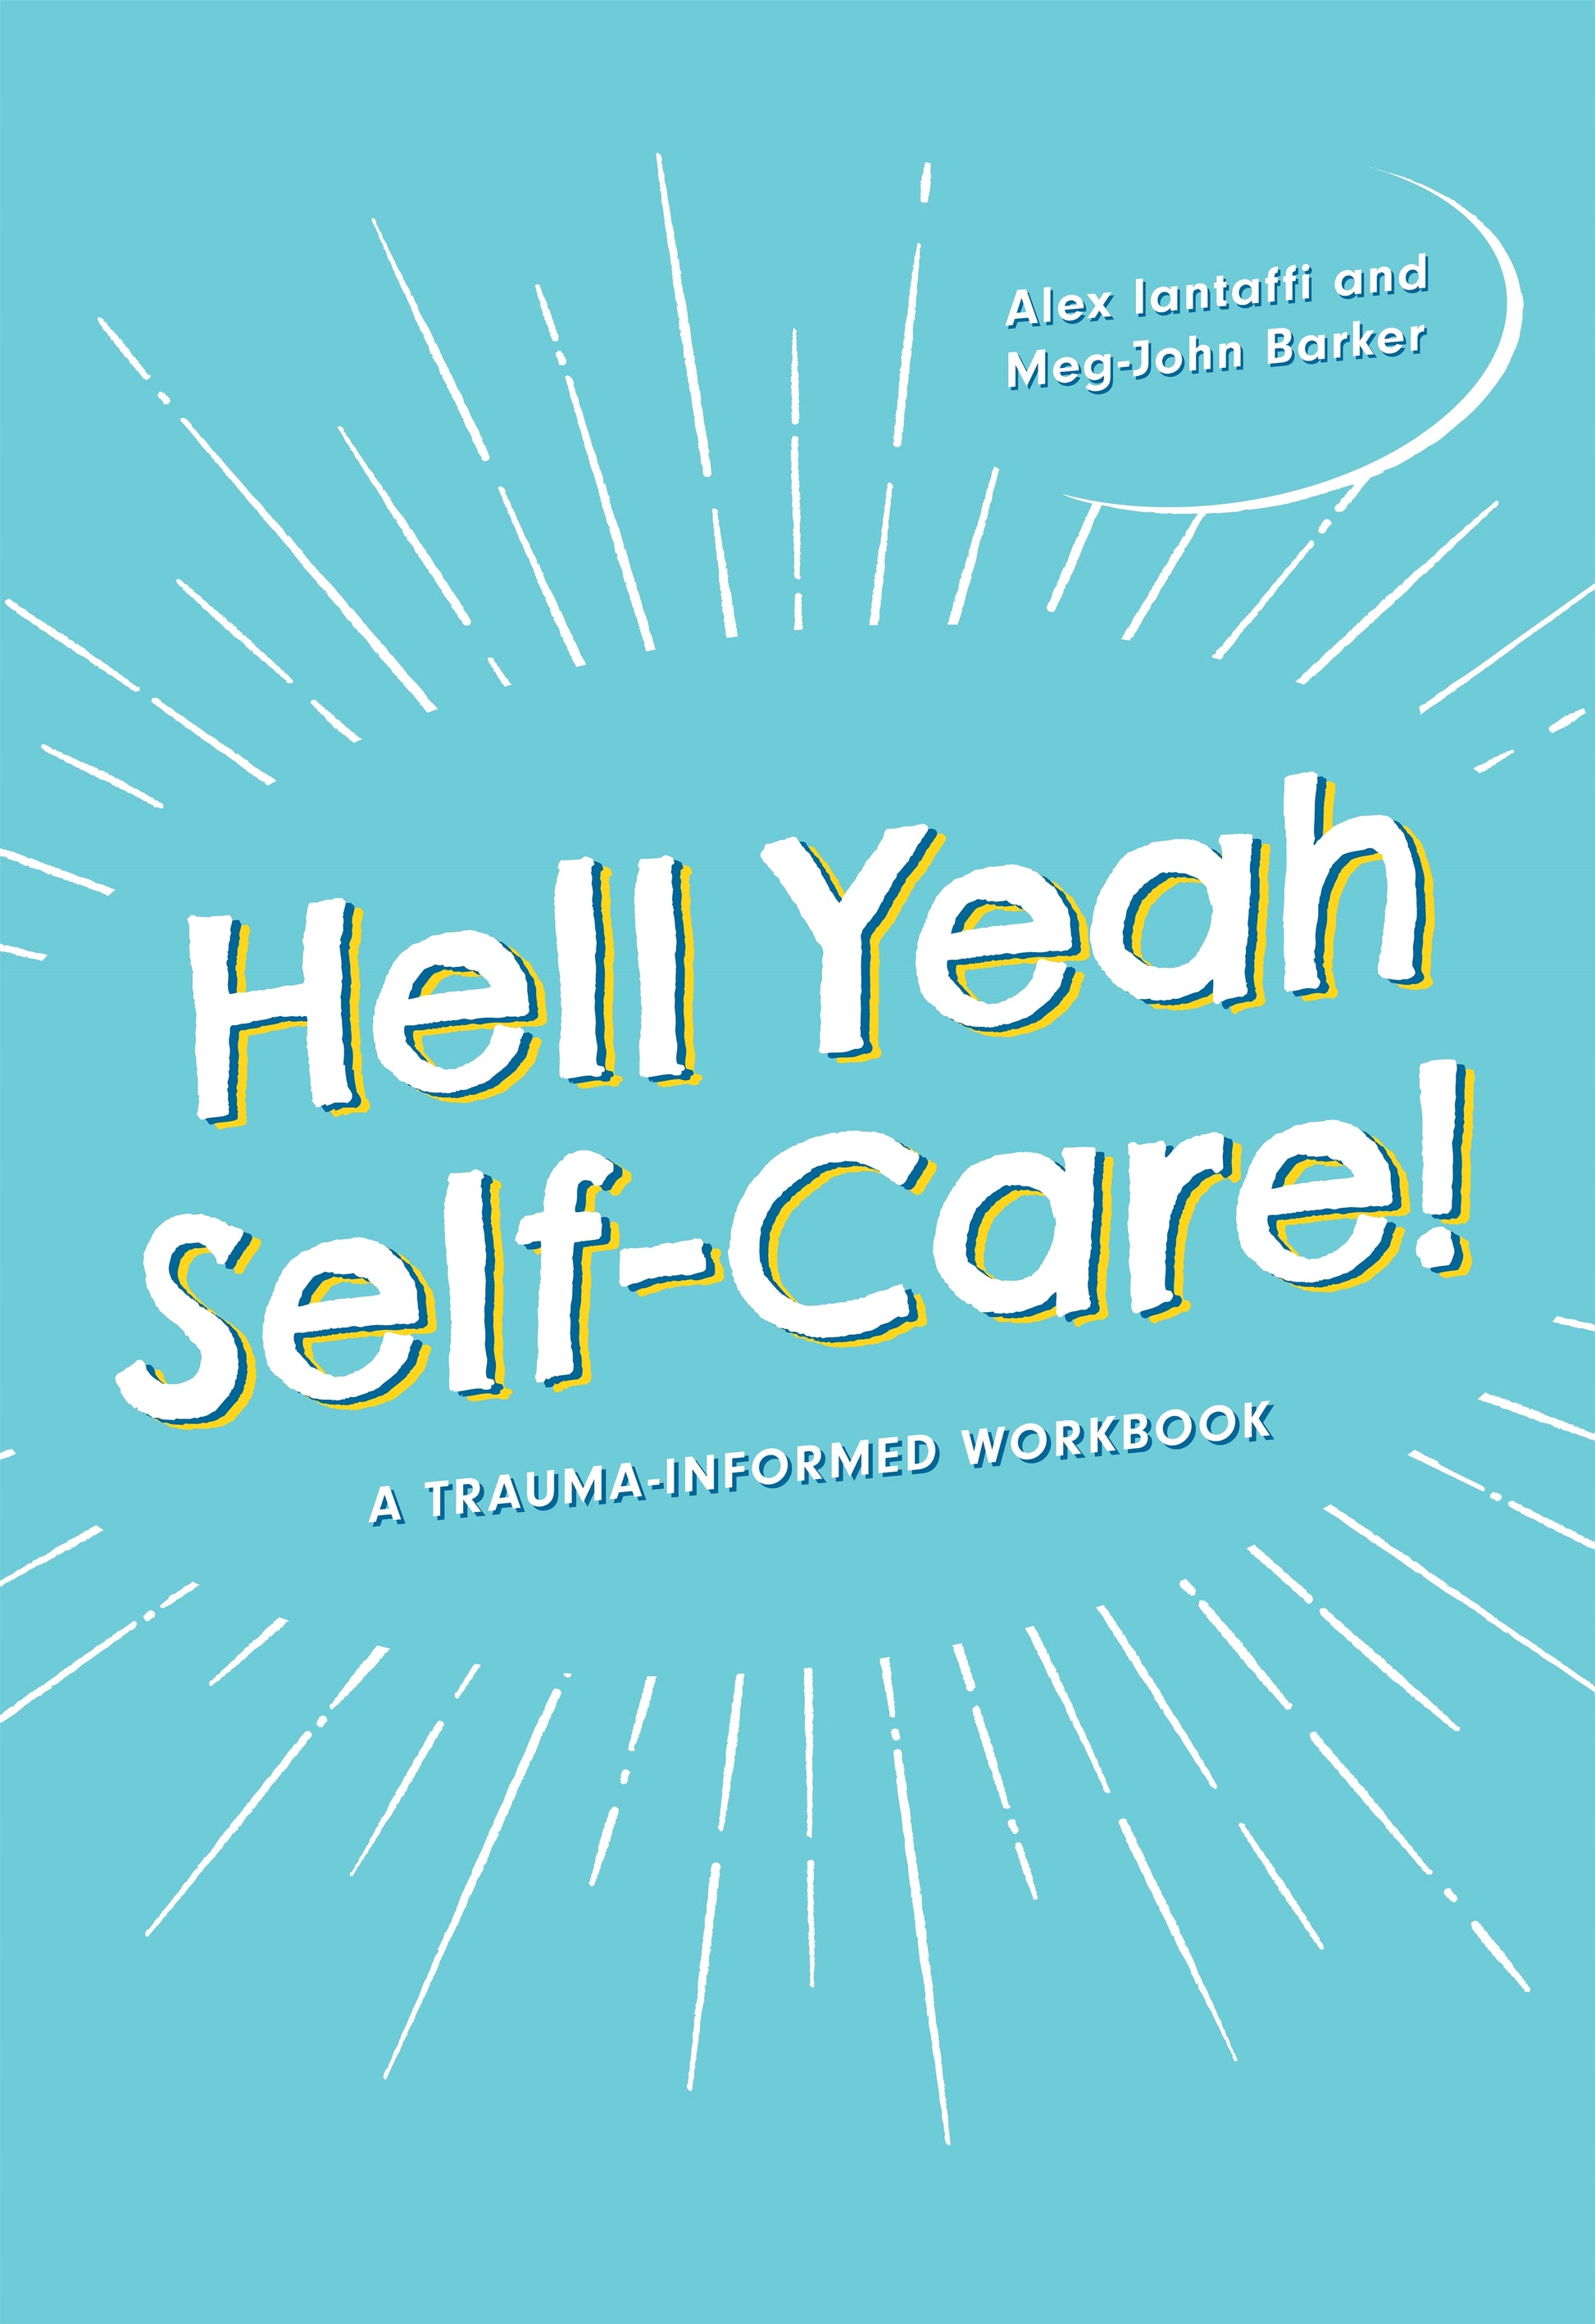 Hell Yeah Self-Care! by Meg-John Barker, Alex Iantaffi, Alex Iantaffi and Meg-John Barker